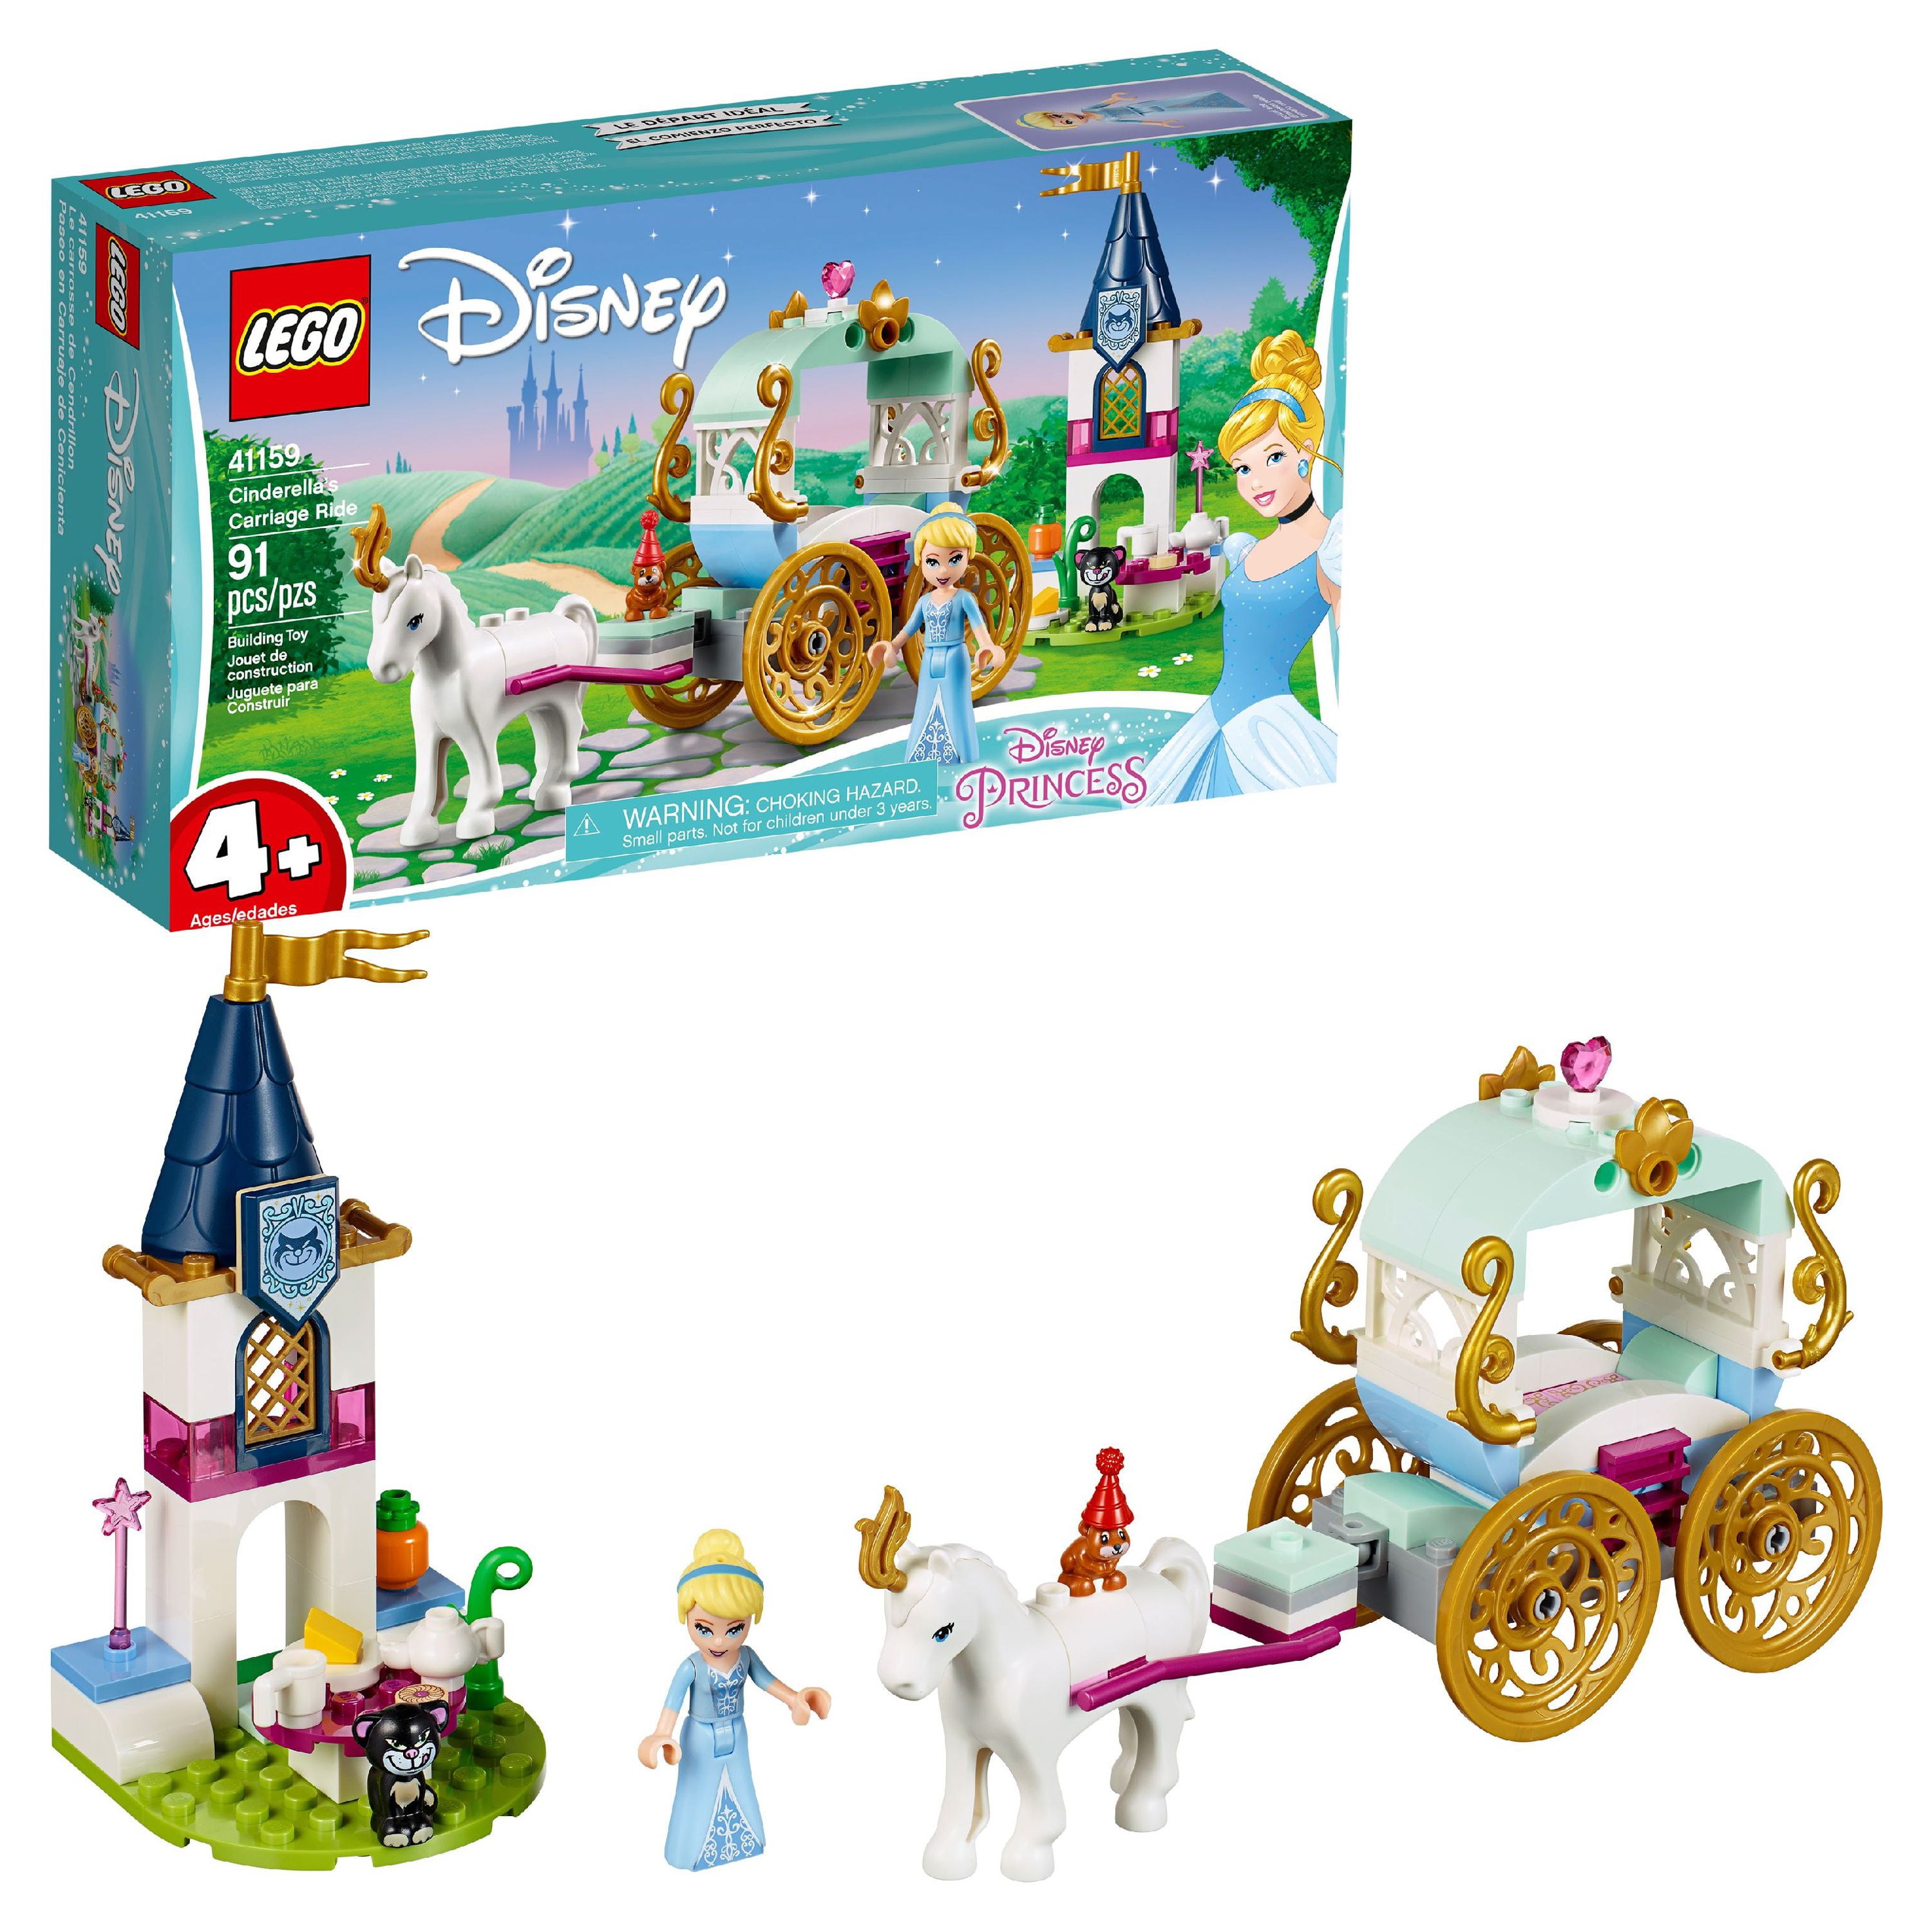 LEGO Disney Princess Cinderella's Carriage Ride Toy 41159 - image 1 of 8